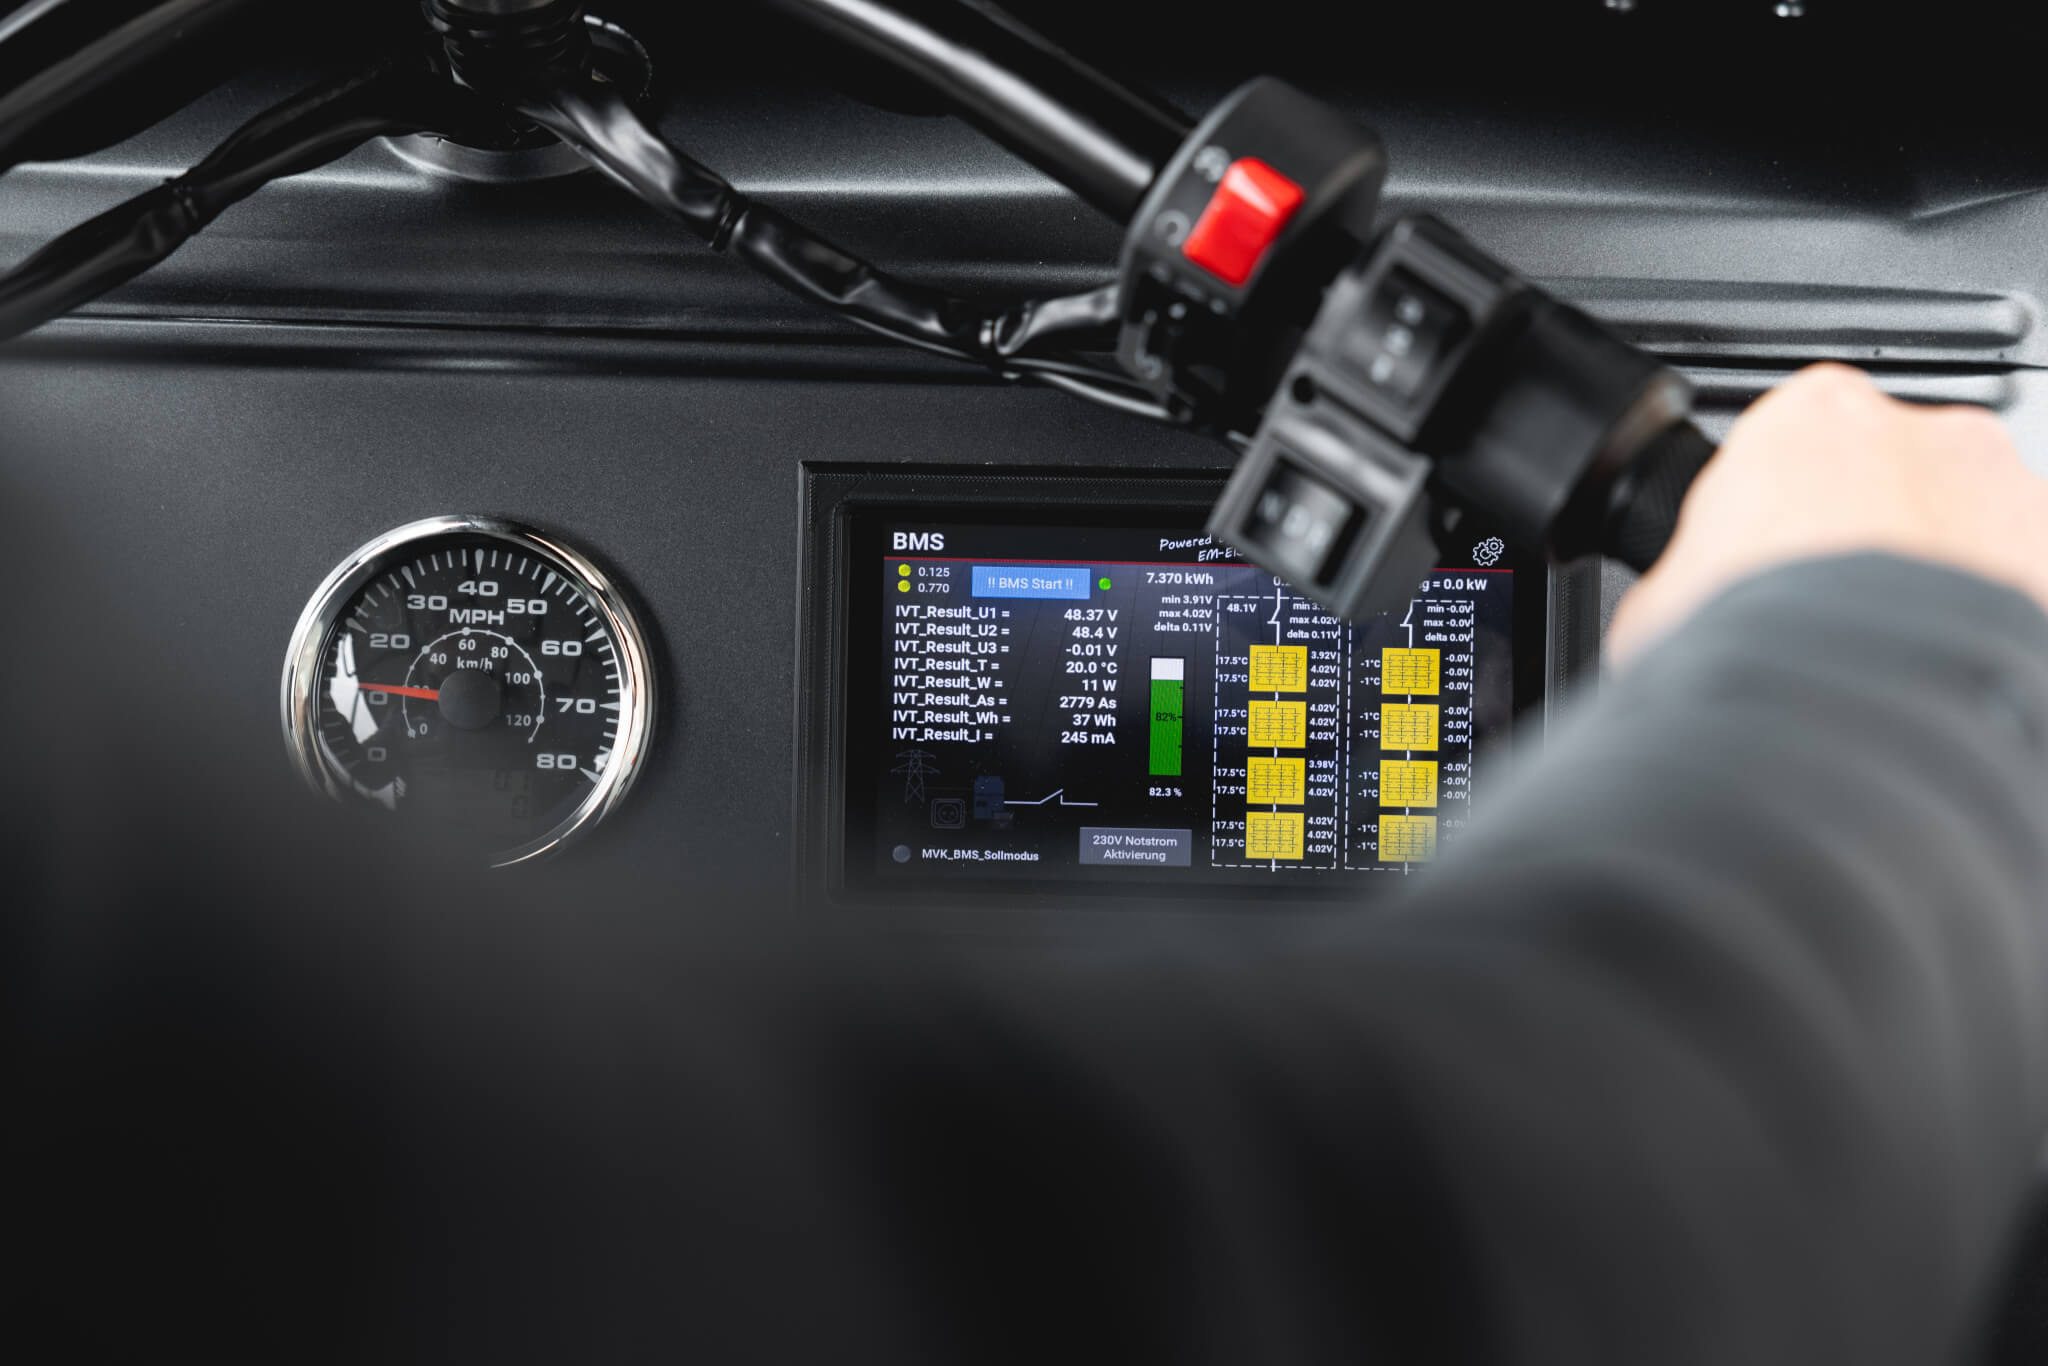 Audi E-Rickshaw - monitor do sistema